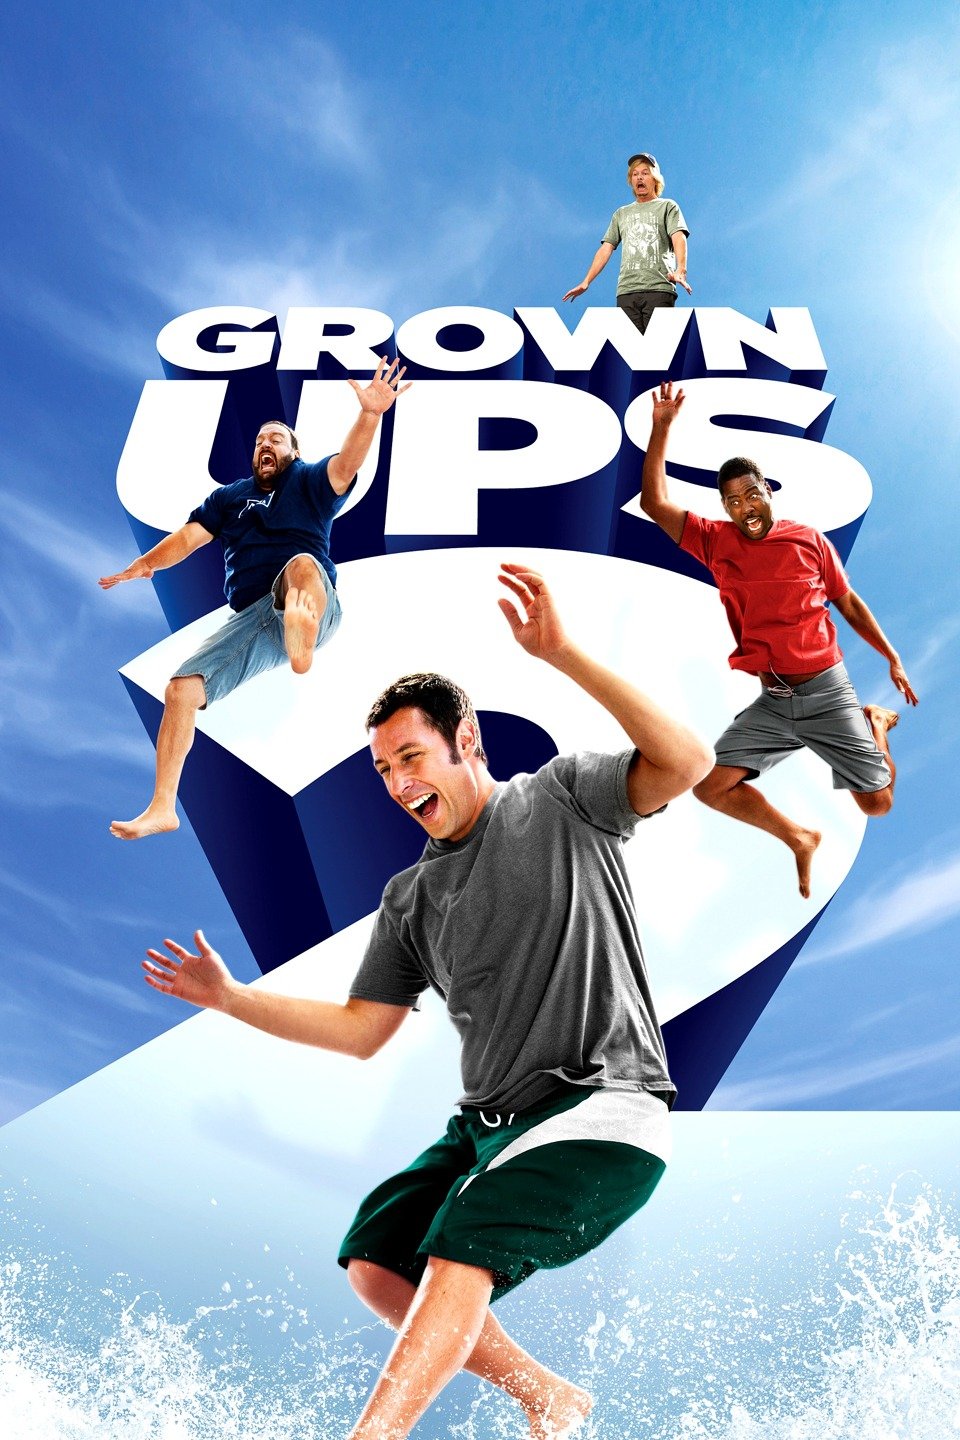 [Mini-HD] Grown Ups 2 (2013) ขาใหญ่ วัยกลับ ภาค 2 [720p] [พากย์ไทย 5.1 + เสียงอังกฤษ 5.1] [บรรยายไทย +อังกฤษ] [เสียงไทย + ซับไทย] [OPENLOAD]